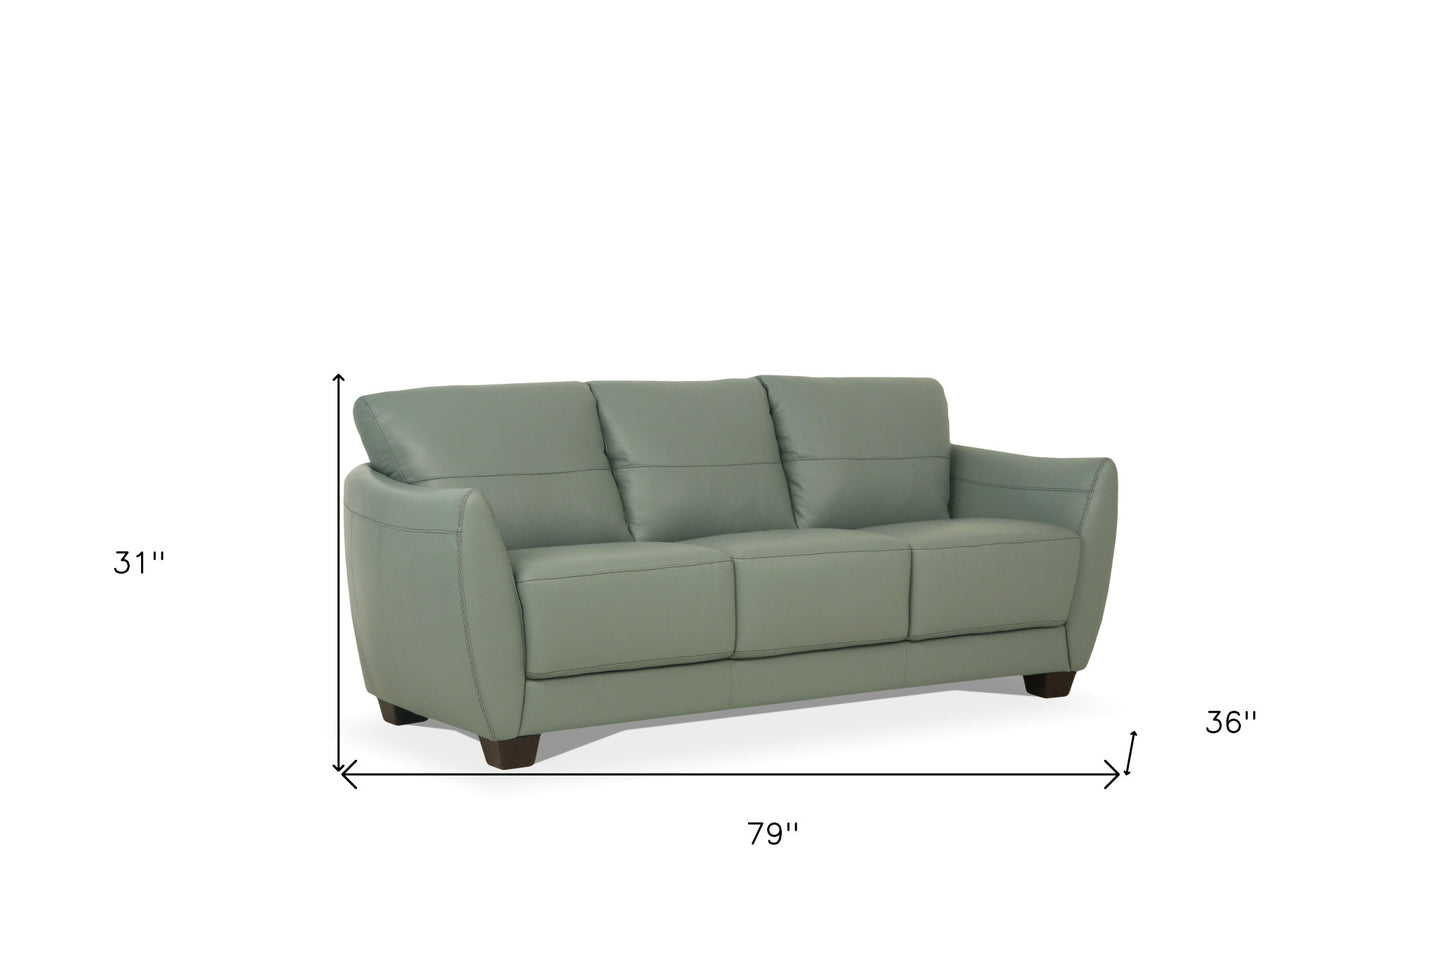 79" Tea Green Leather Sofa With Black Legs